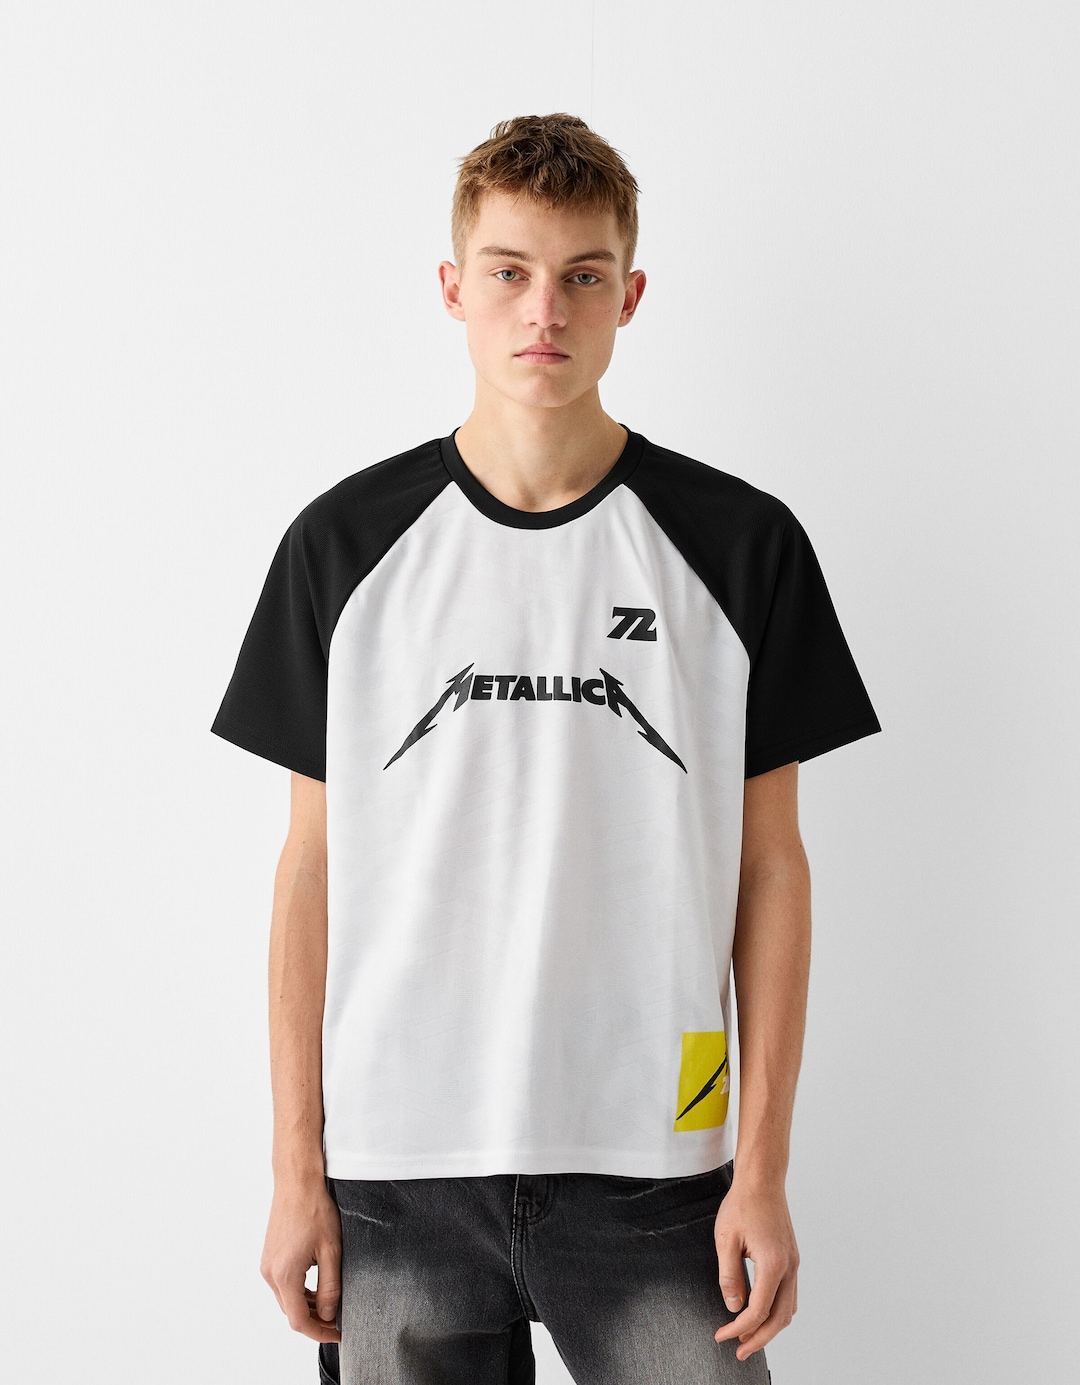 T-shirt Metallica manga curta técnica estampado